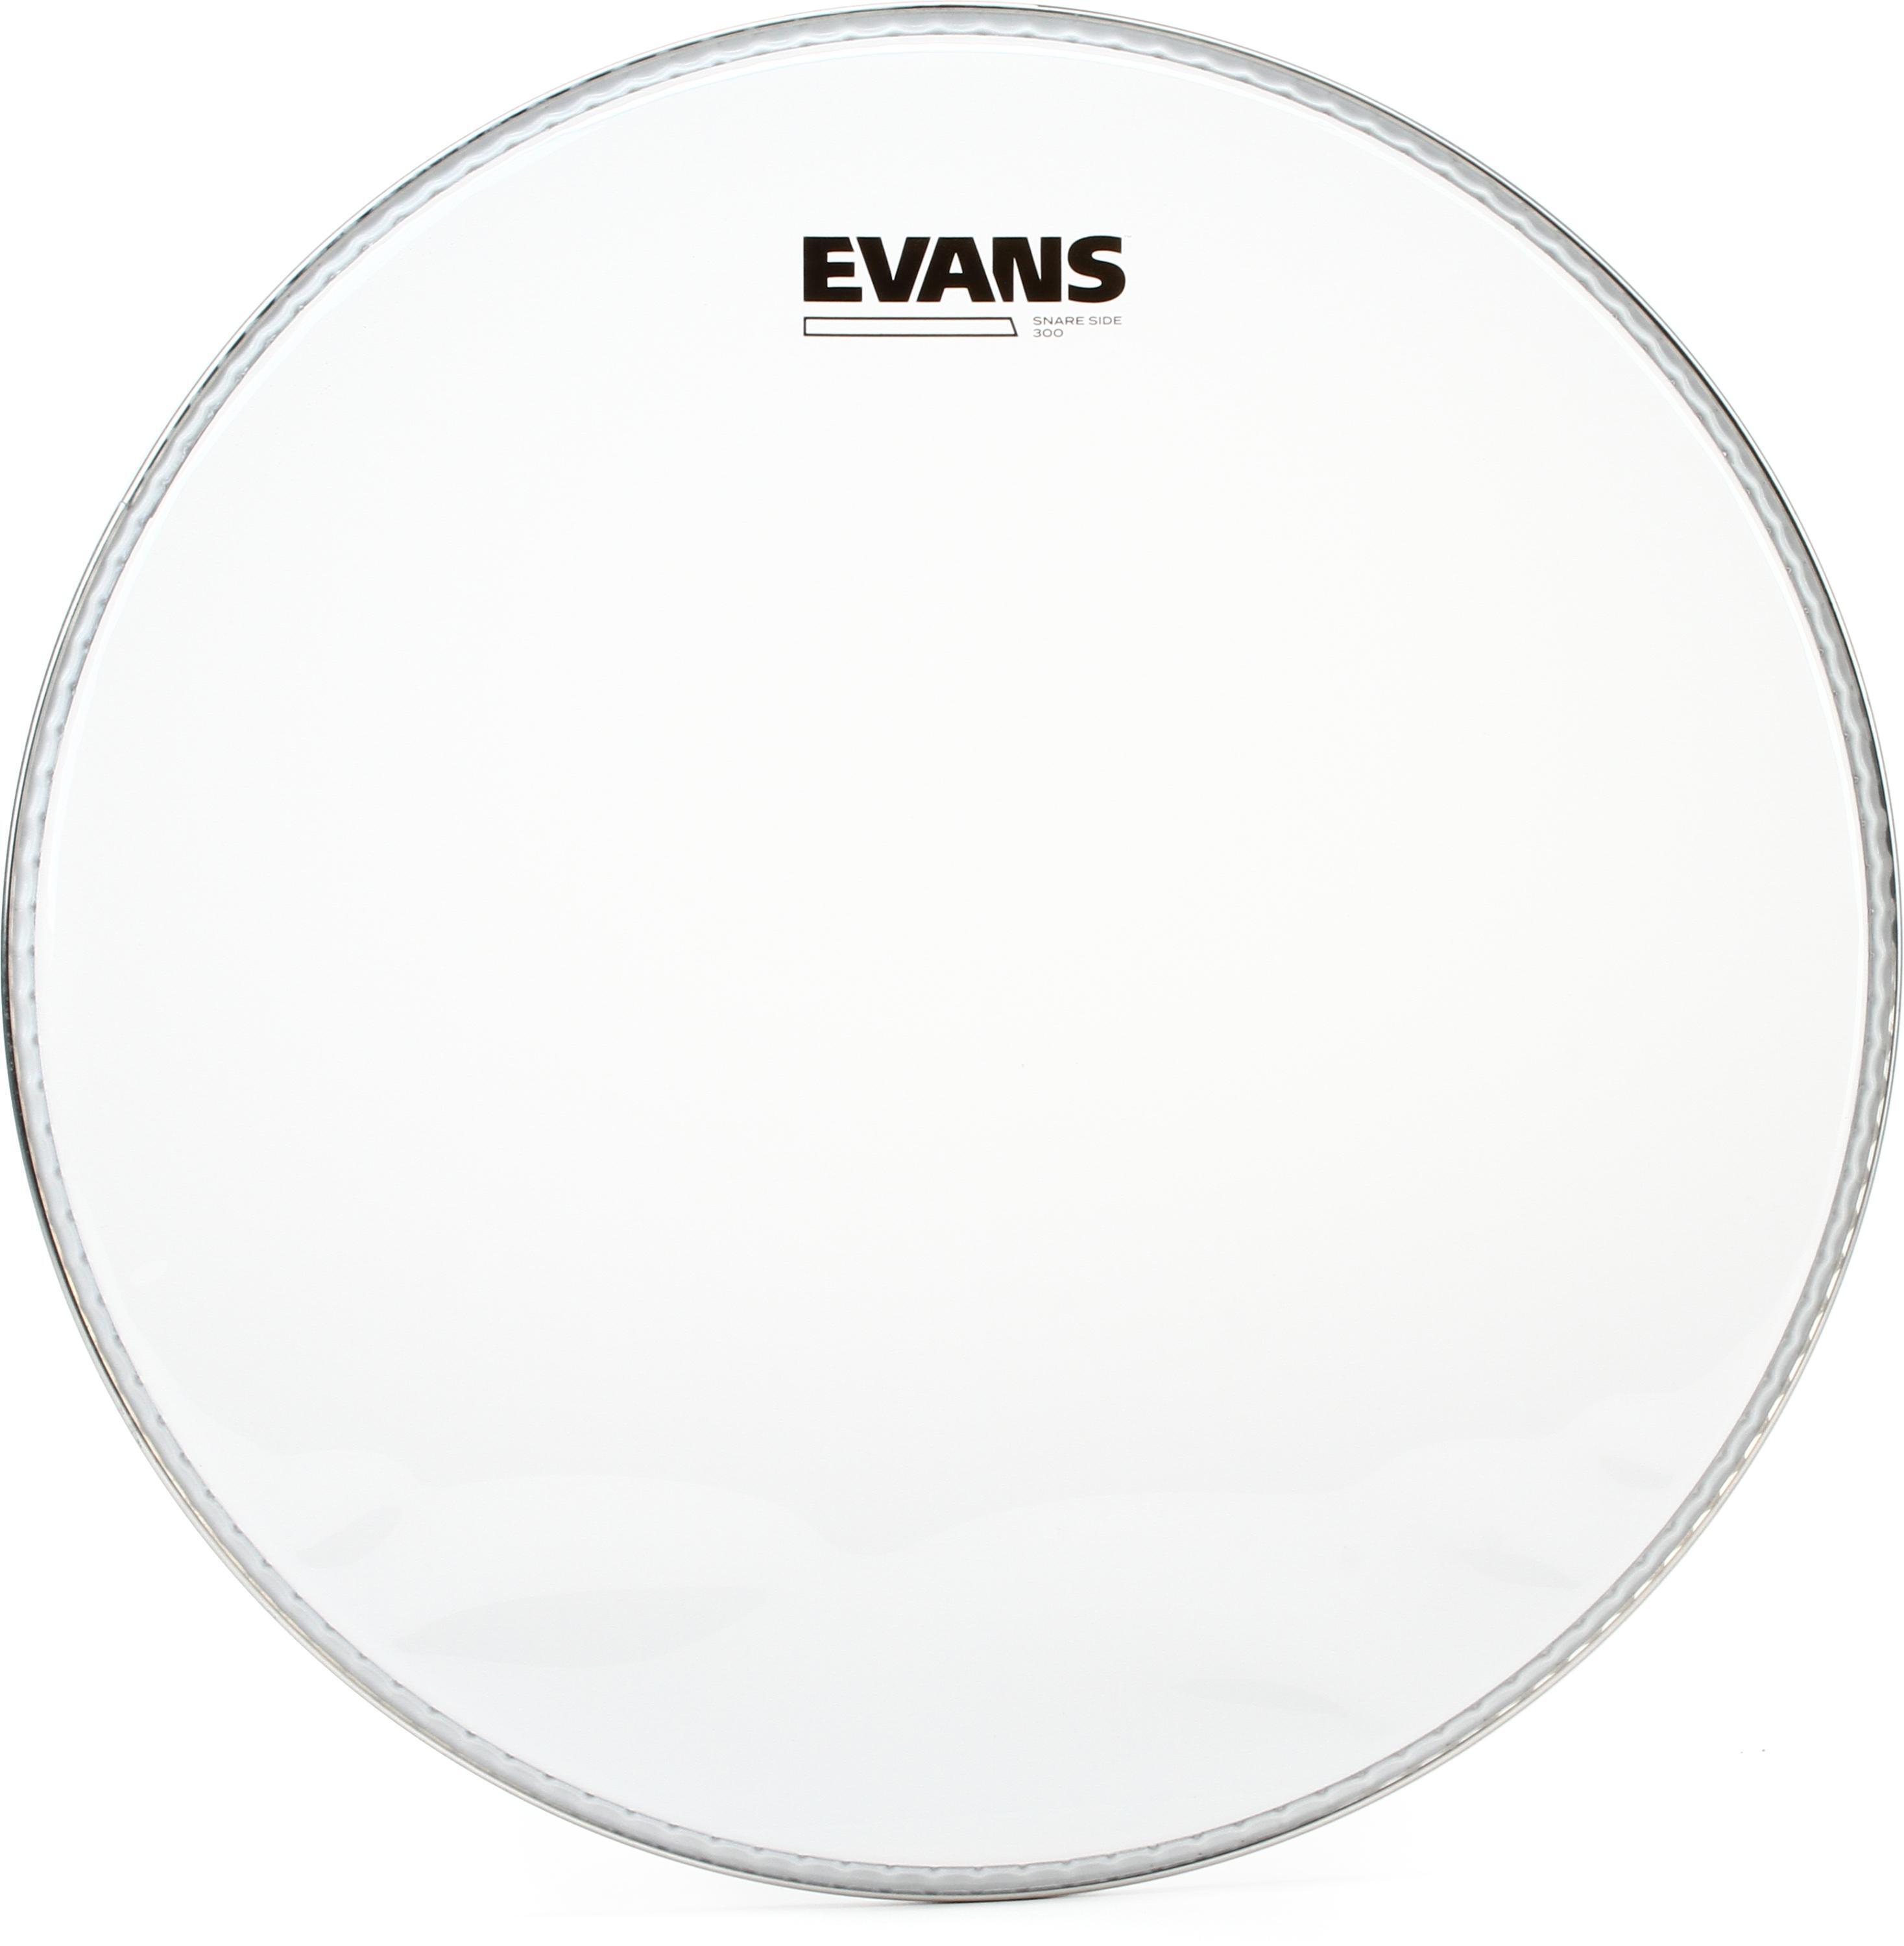 Bundled Item: Evans Snare Side 300 Drumhead - 14 inch